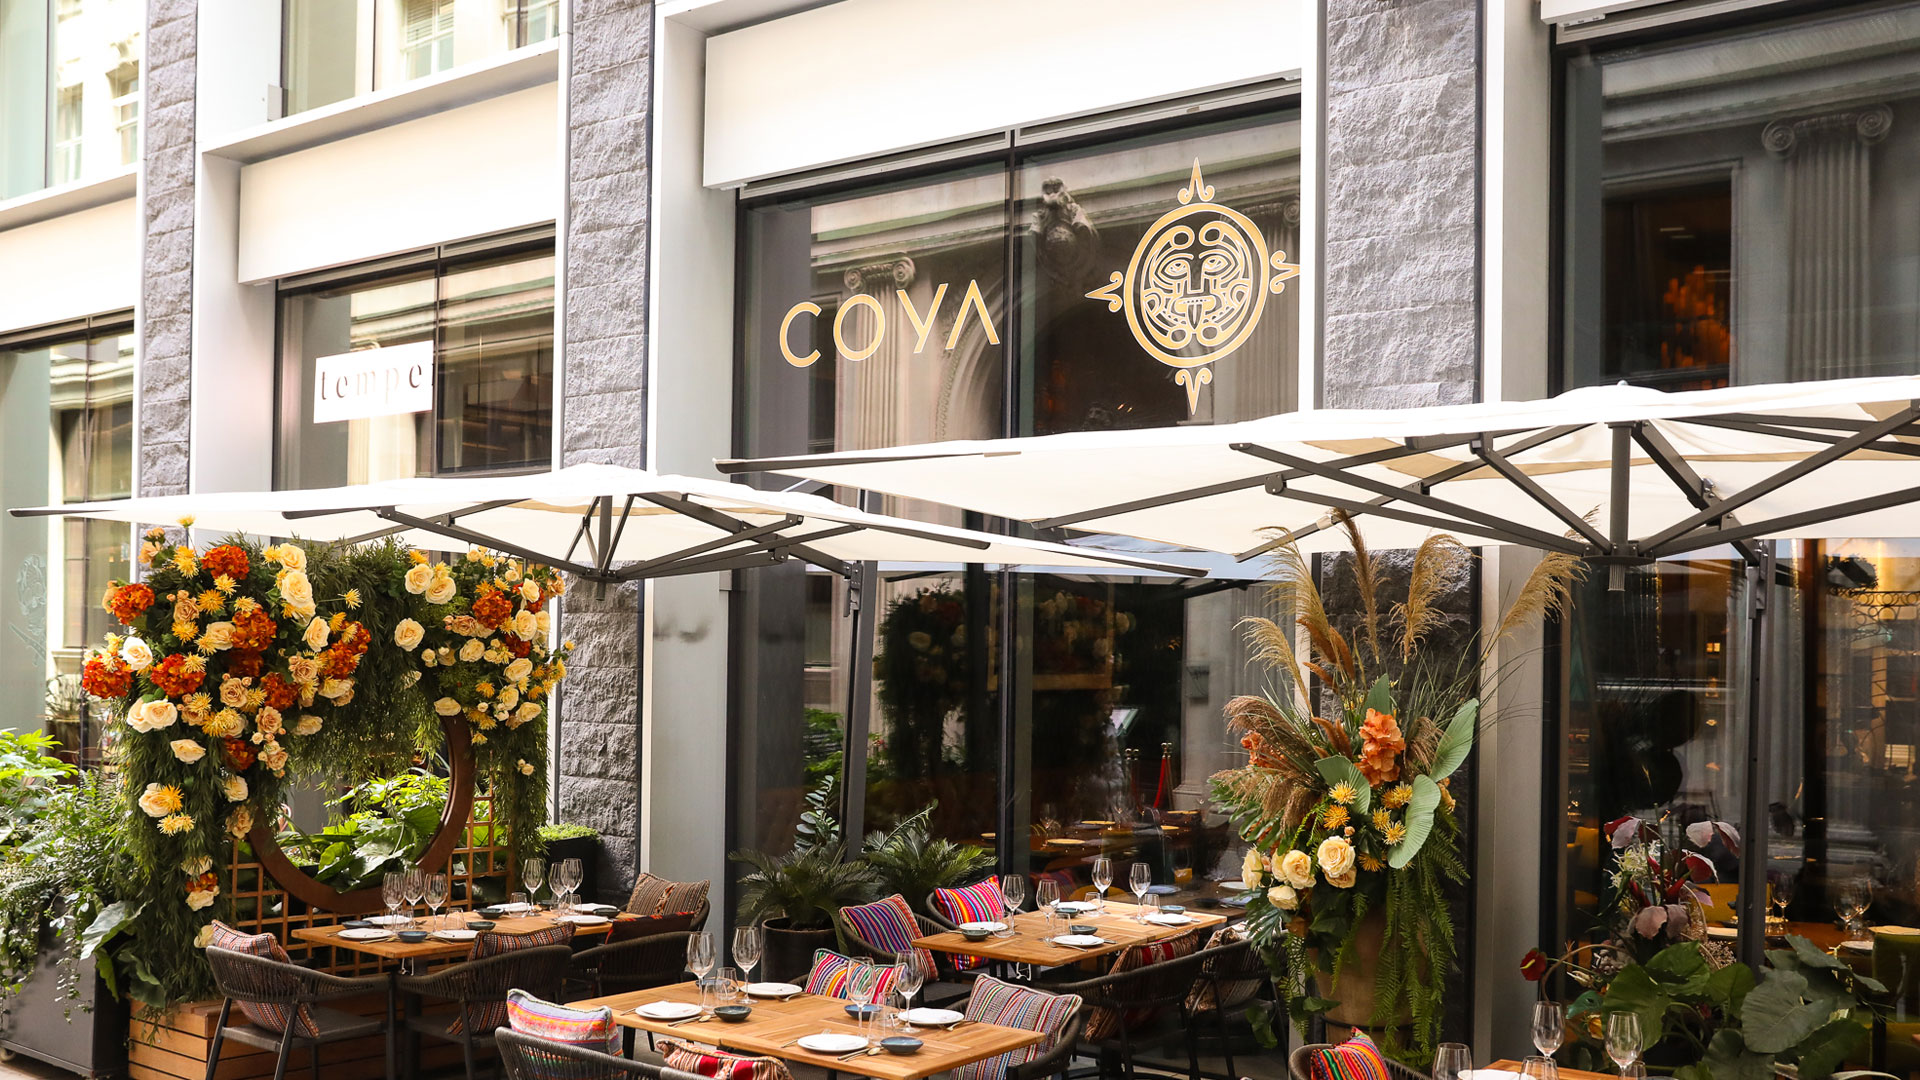 COYA Restaurant, London